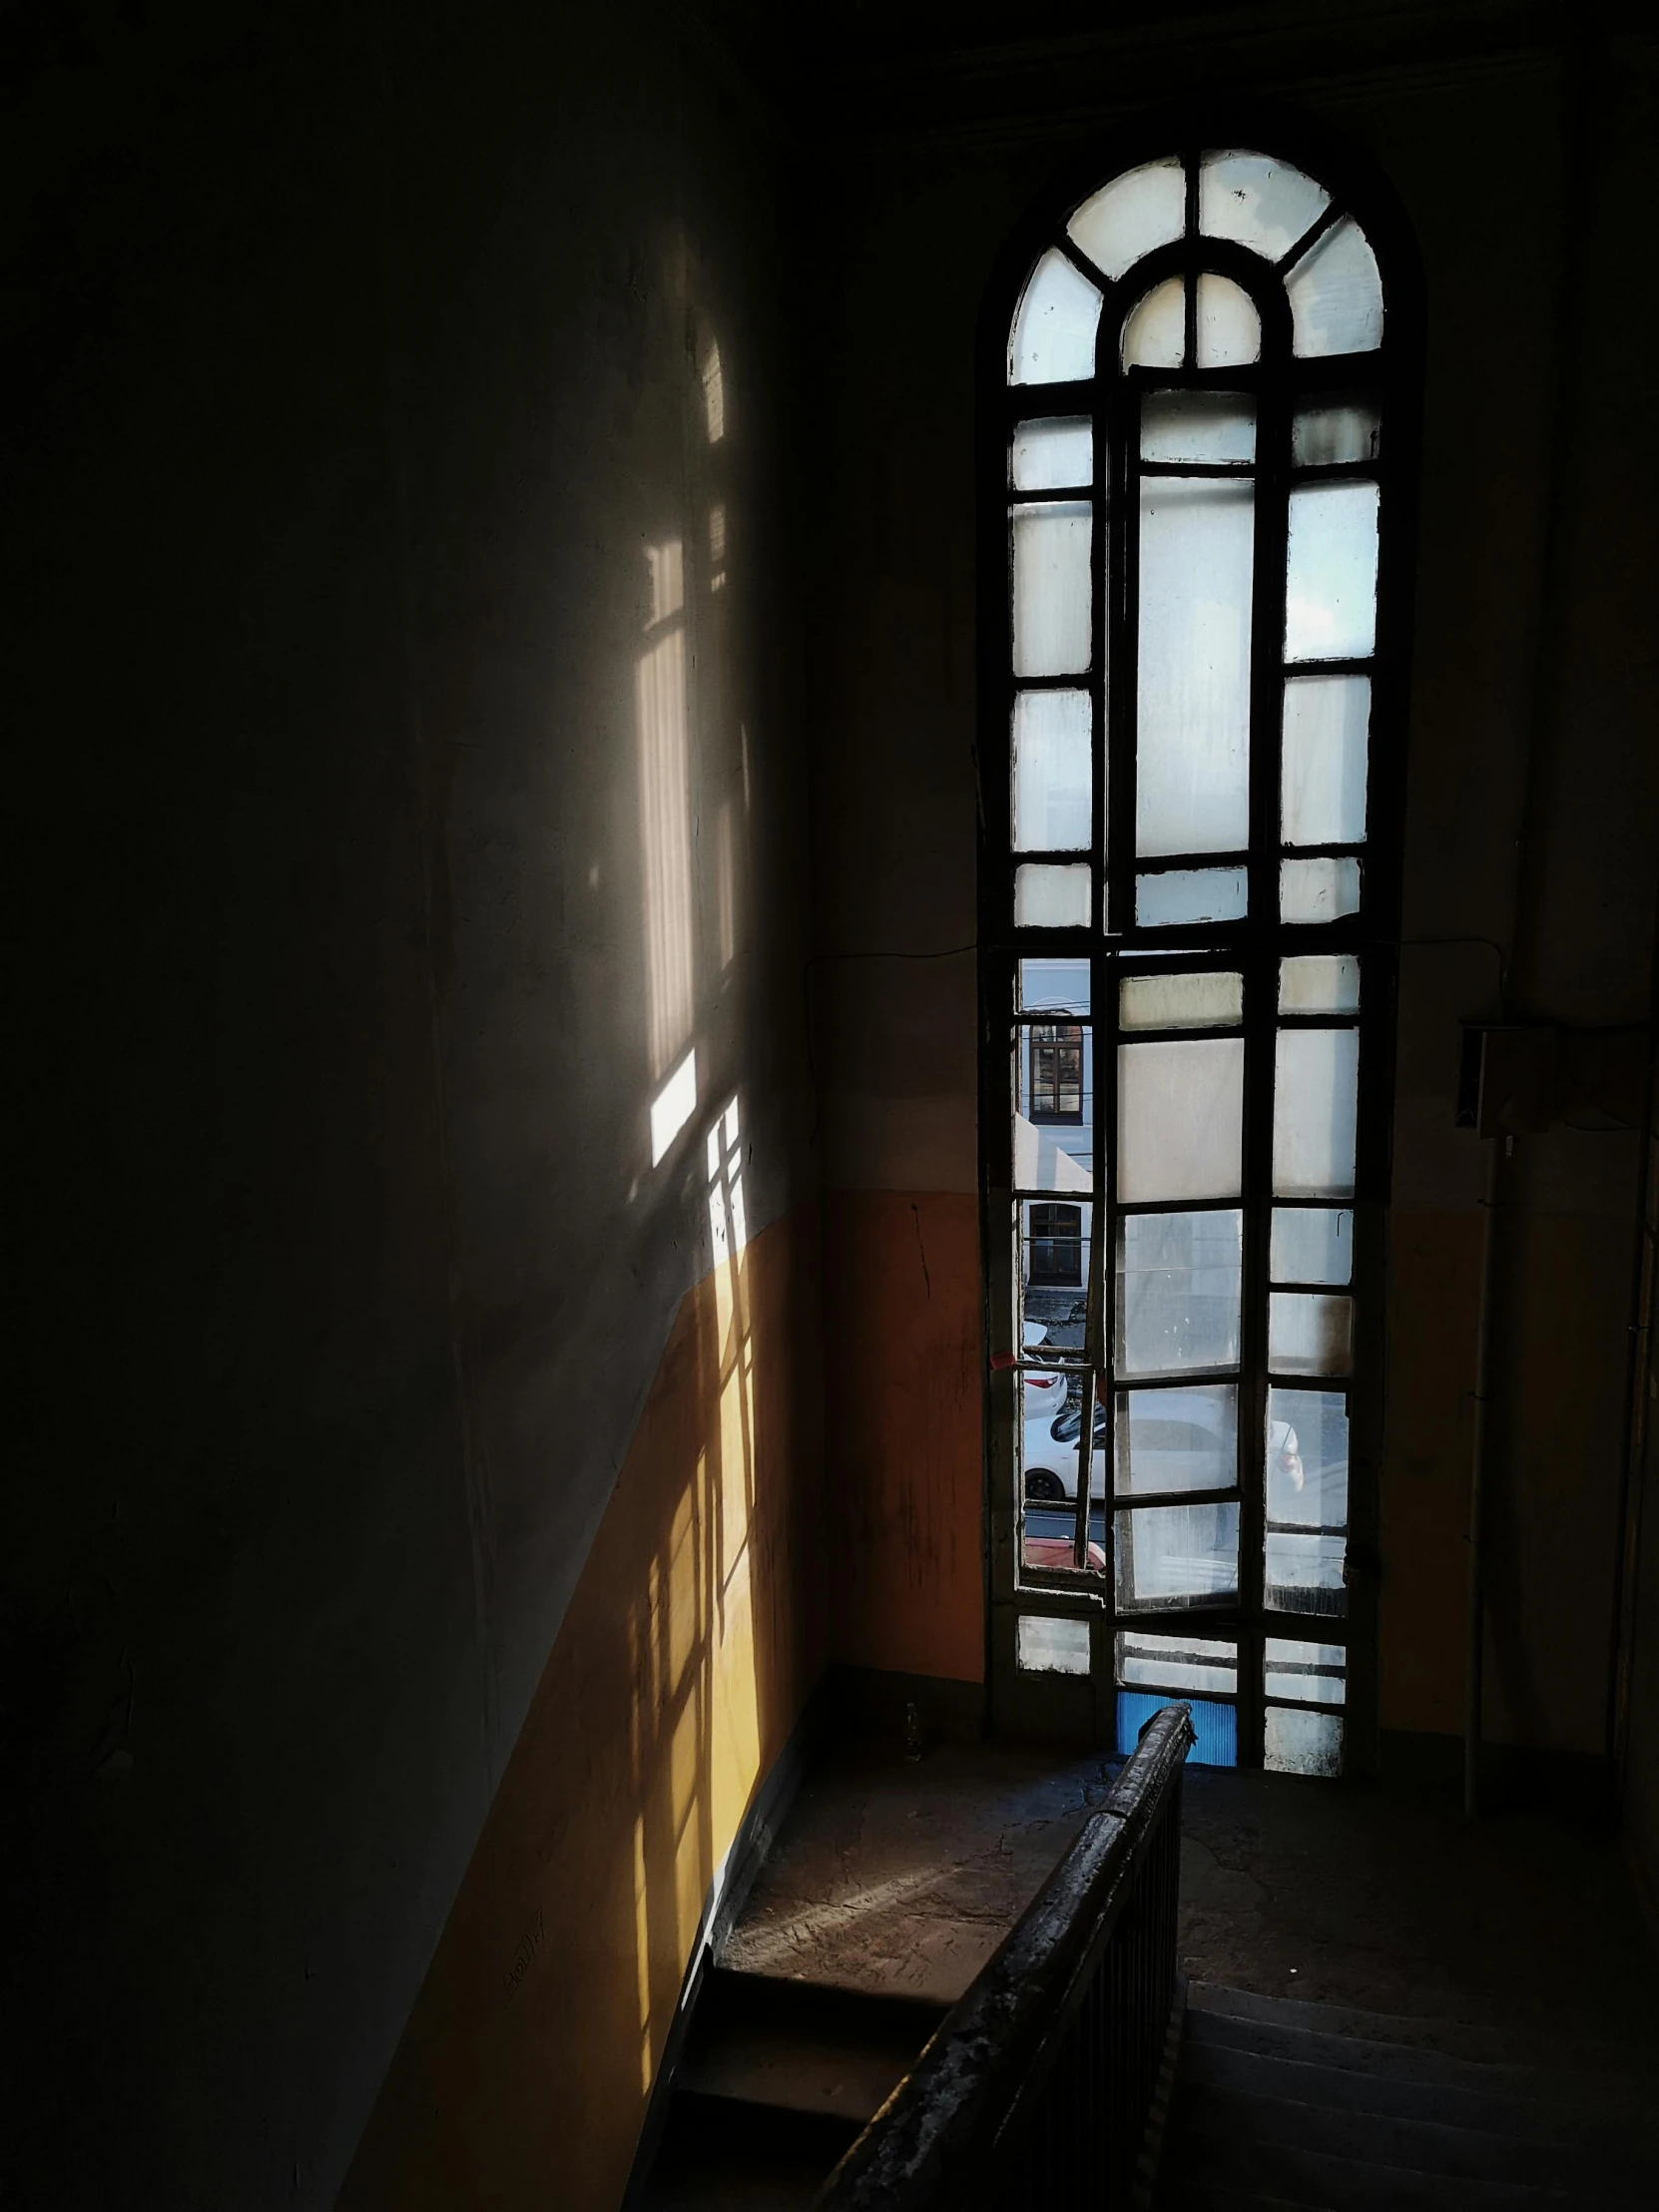 a long window in the corner of a dark room